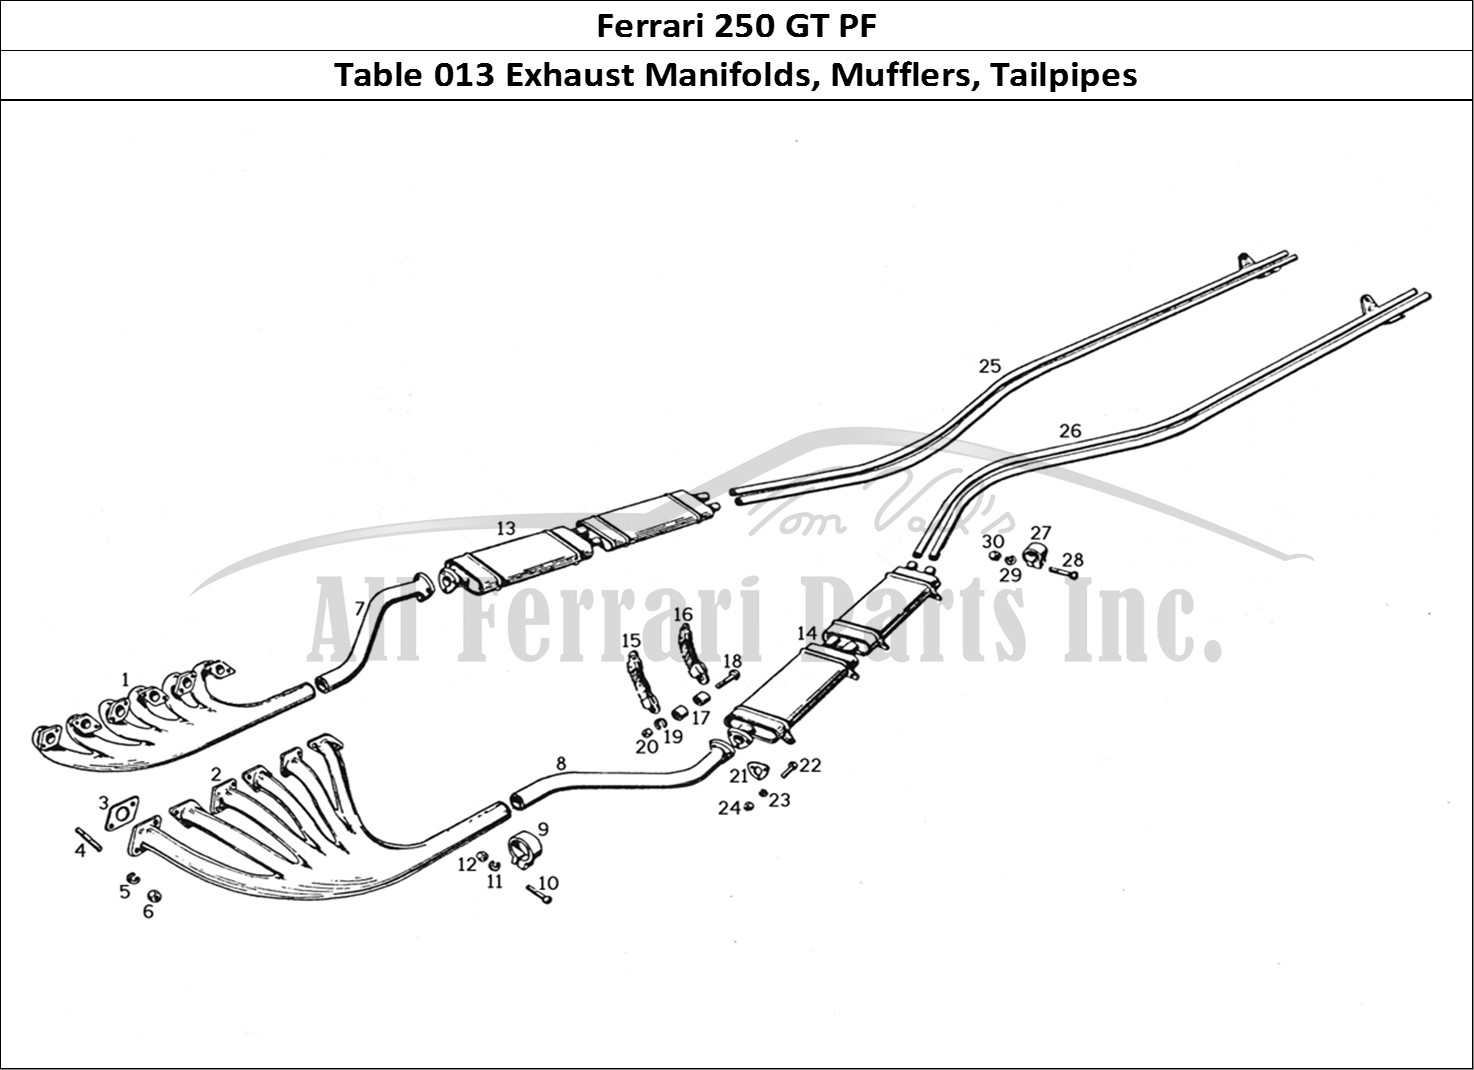 Ferrari Parts Ferrari 250 GTE (1957) Page 013 Exhaust Manifolds, Muffle